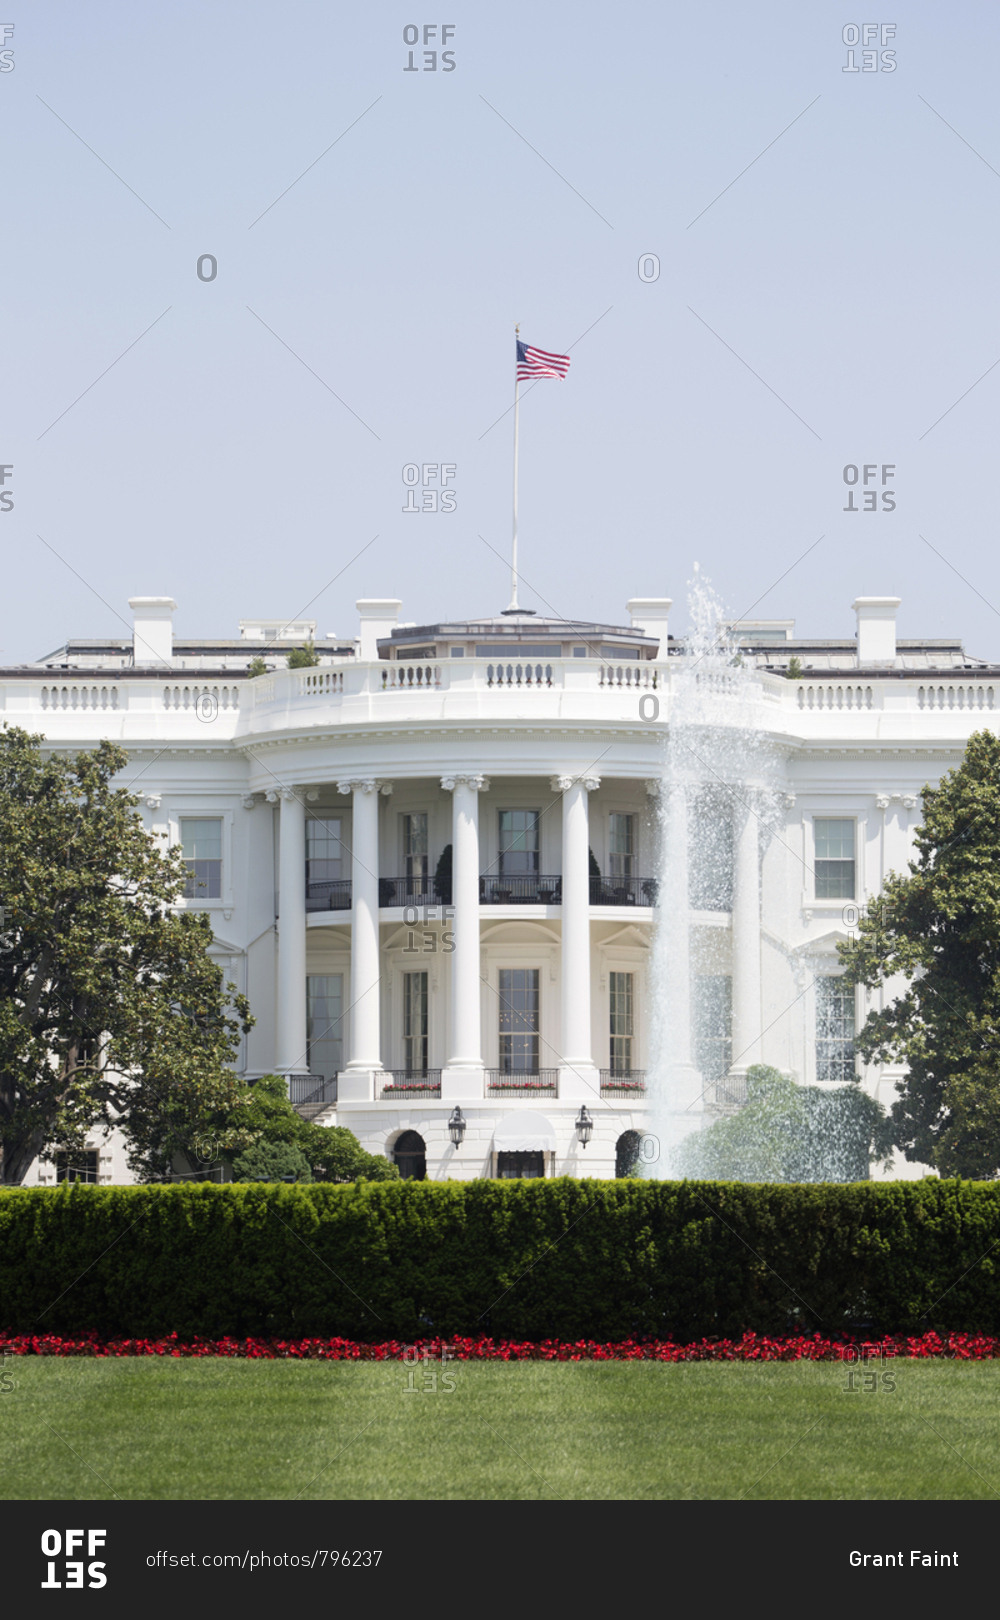 The White House in Washington D.C., USA